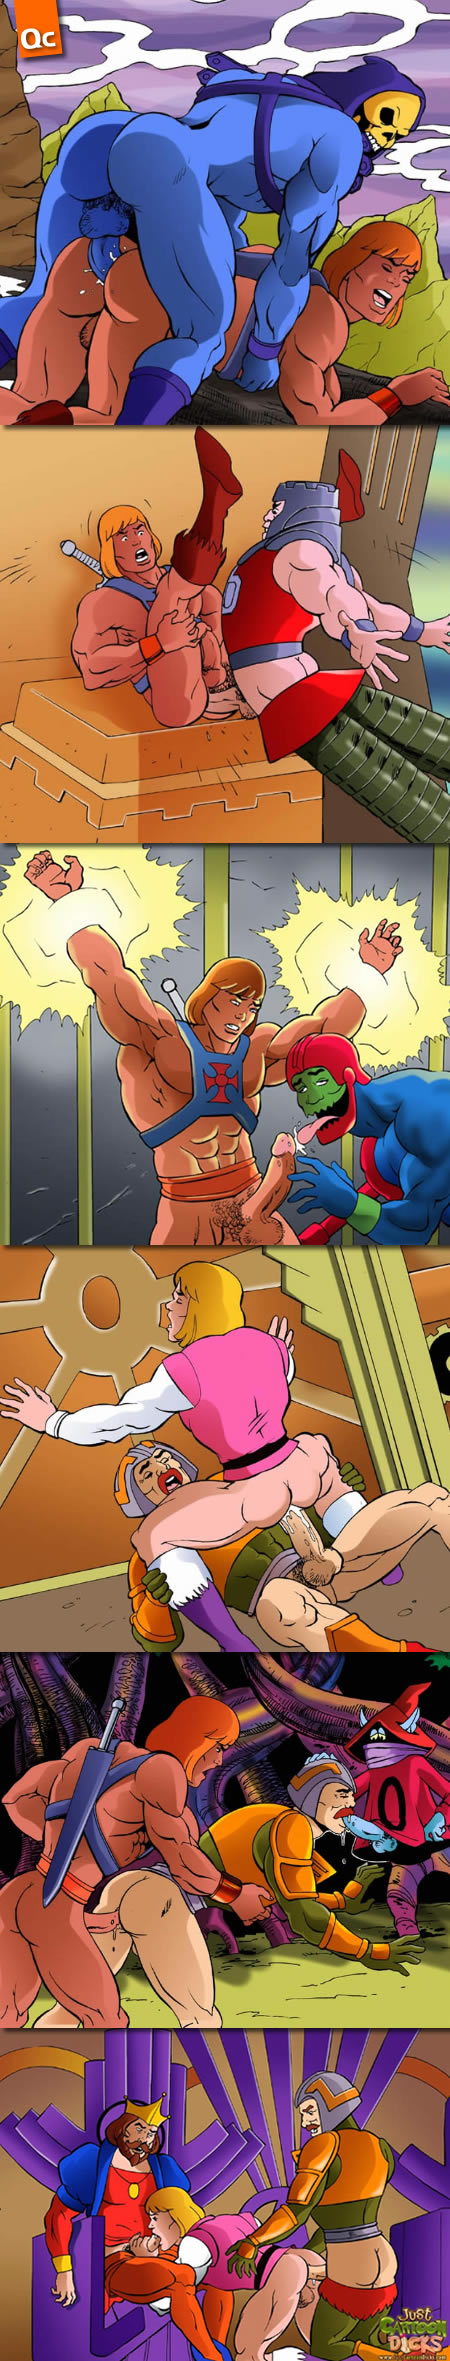 He-Man's A Big Ol' Bottom!